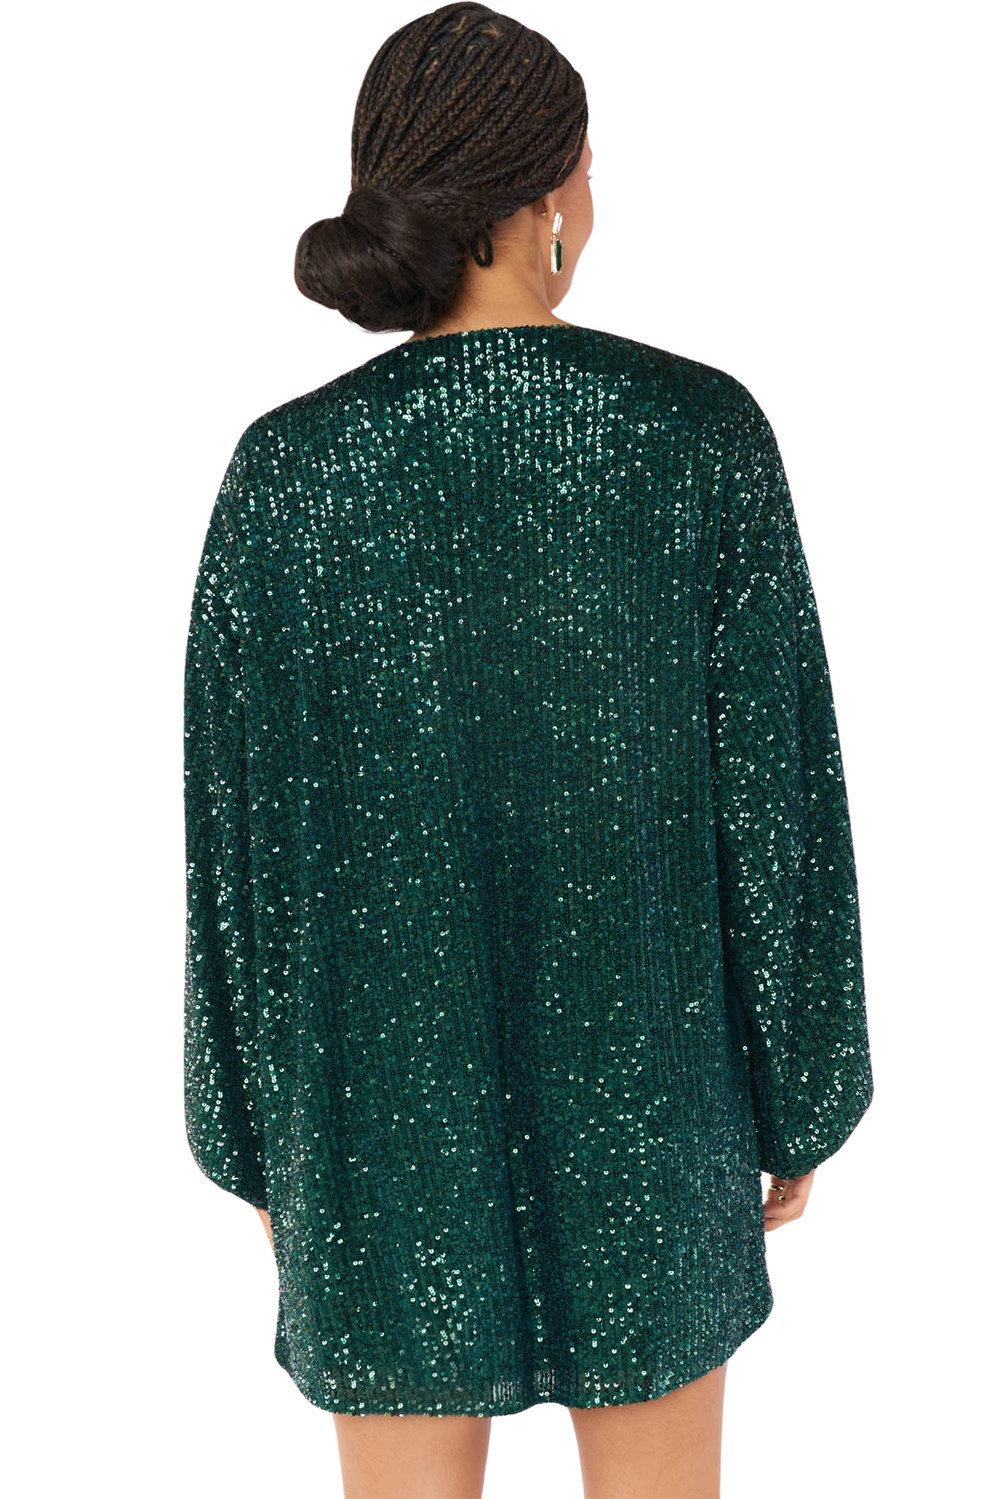 Sure Thing Mini Dress - Emerald Sequins